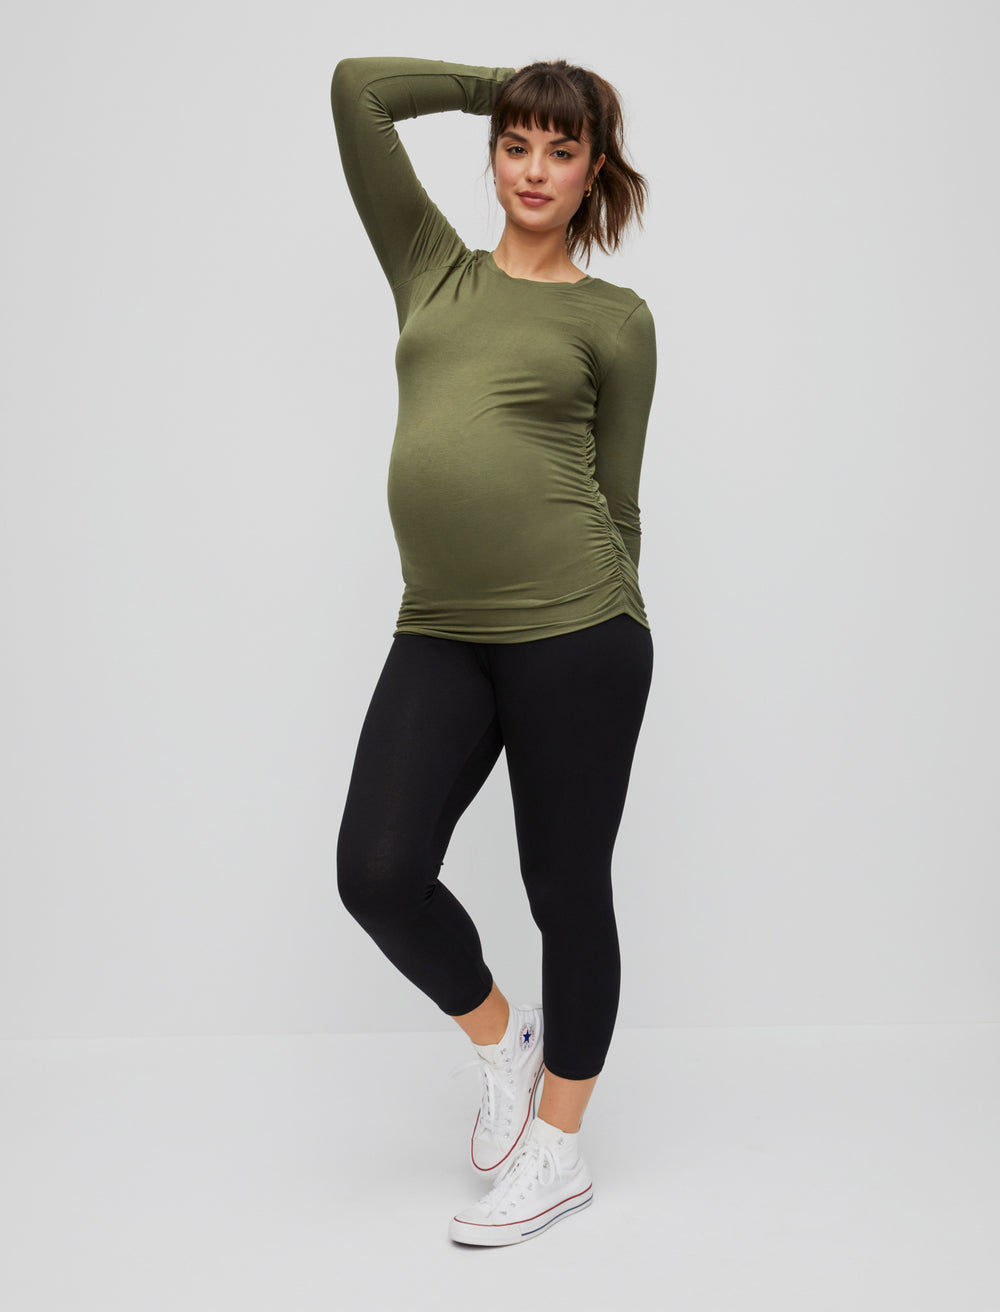 Stretchable Pregnancy & Post Delivery Leggings - Dark Grey (XL)